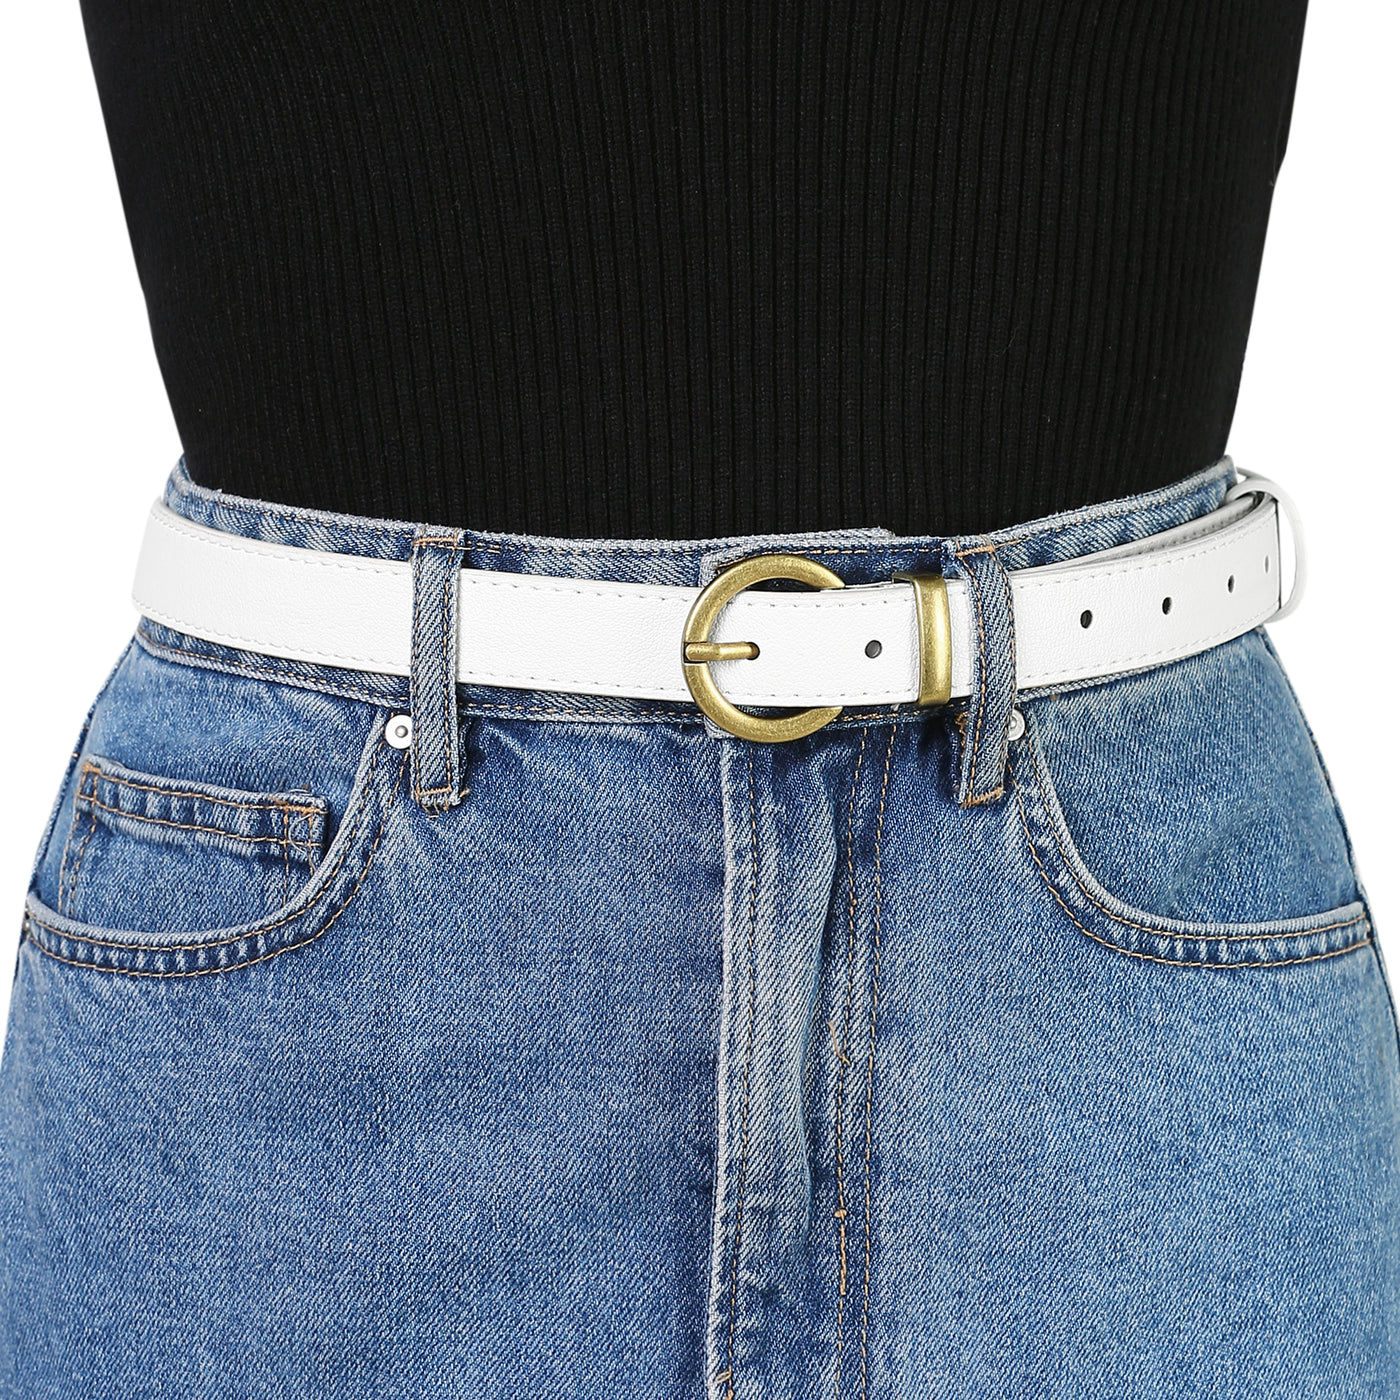 Allegra K PU Leather Bronze Metal Pin Buckle Thin Waist Jeans Dress Belts